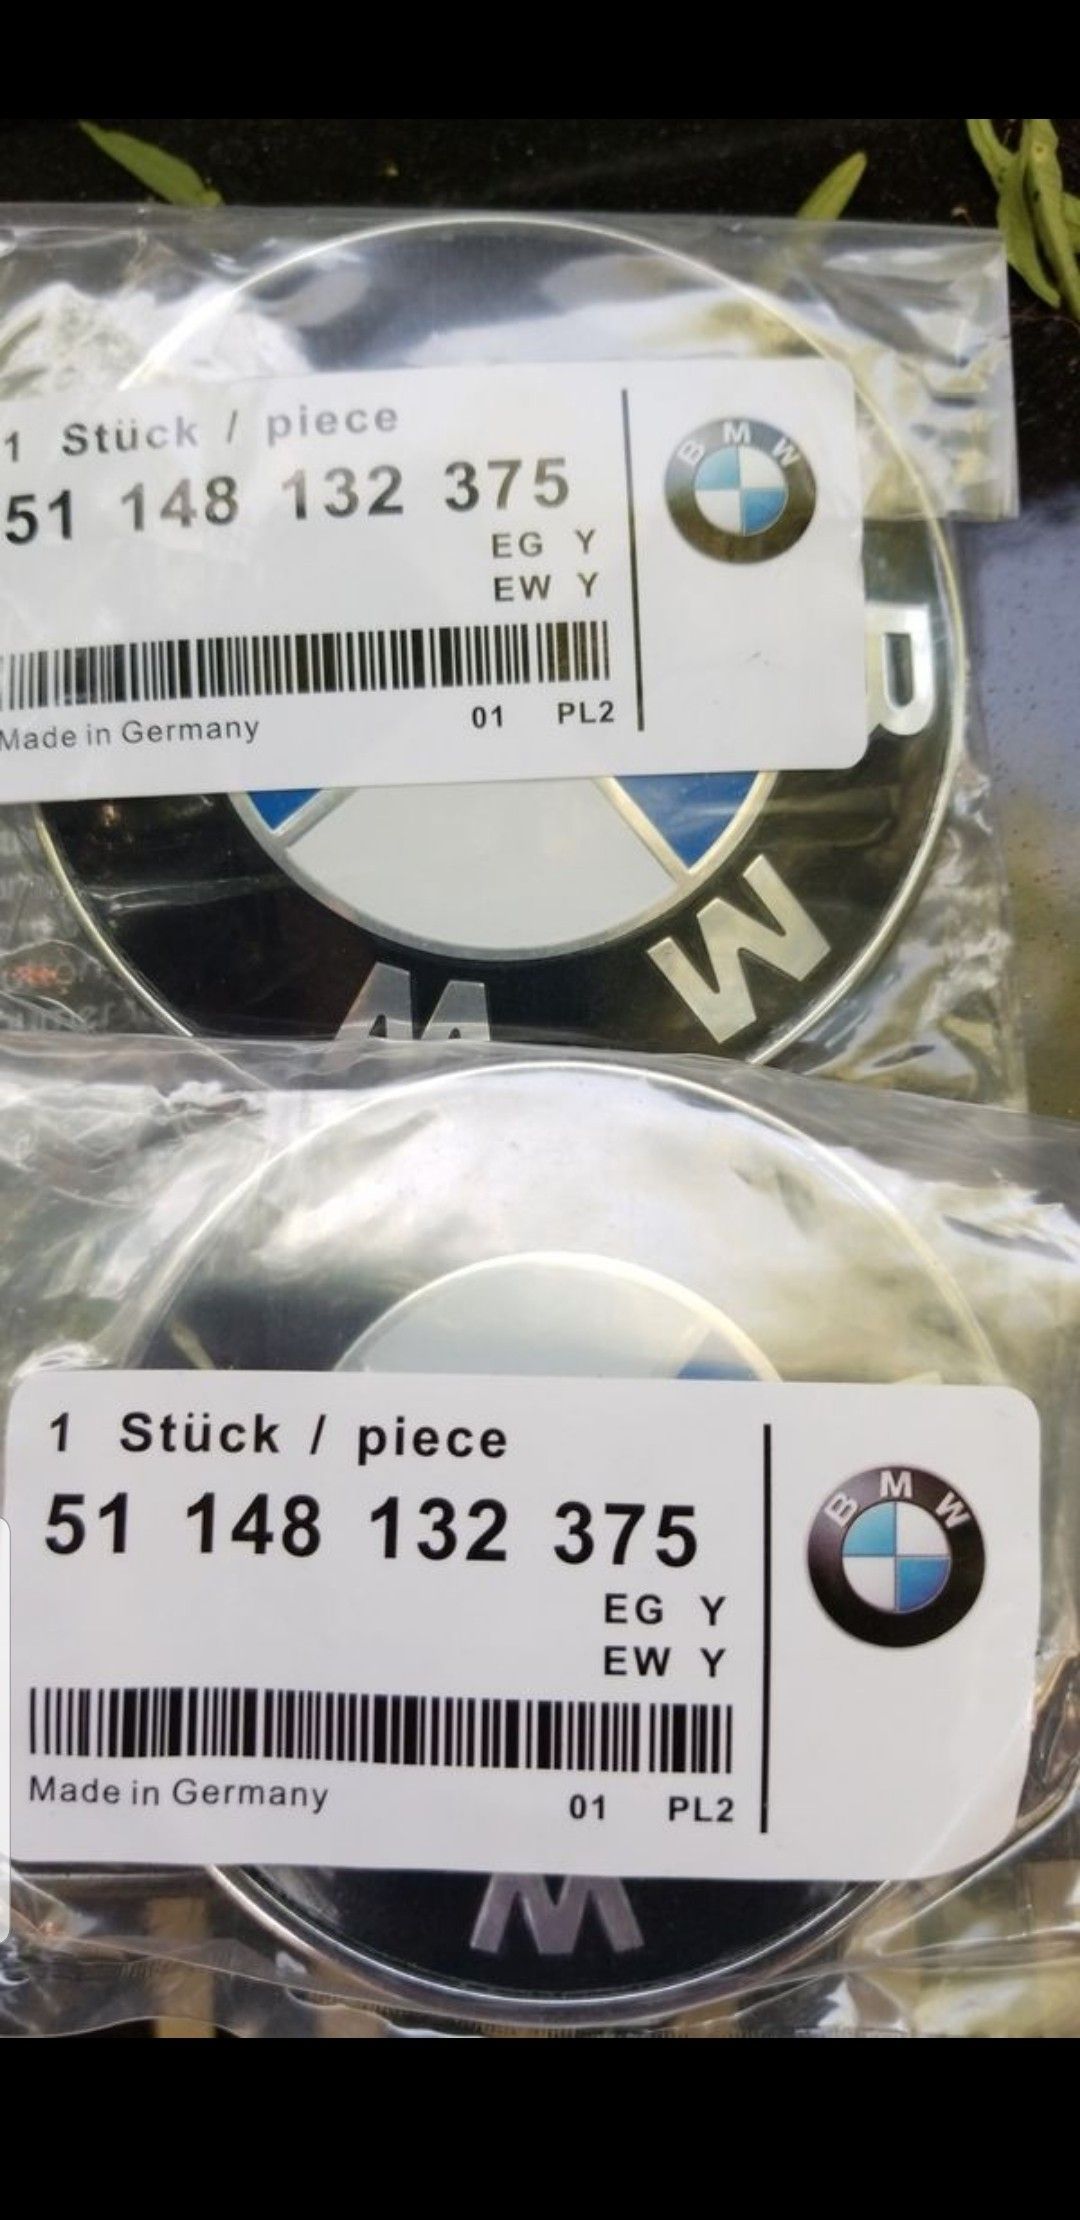 Brand New set of 2 BMW logo emblems fits all BMW rims 335i 535i 328i 528i x5 m3 m5 530i 330i